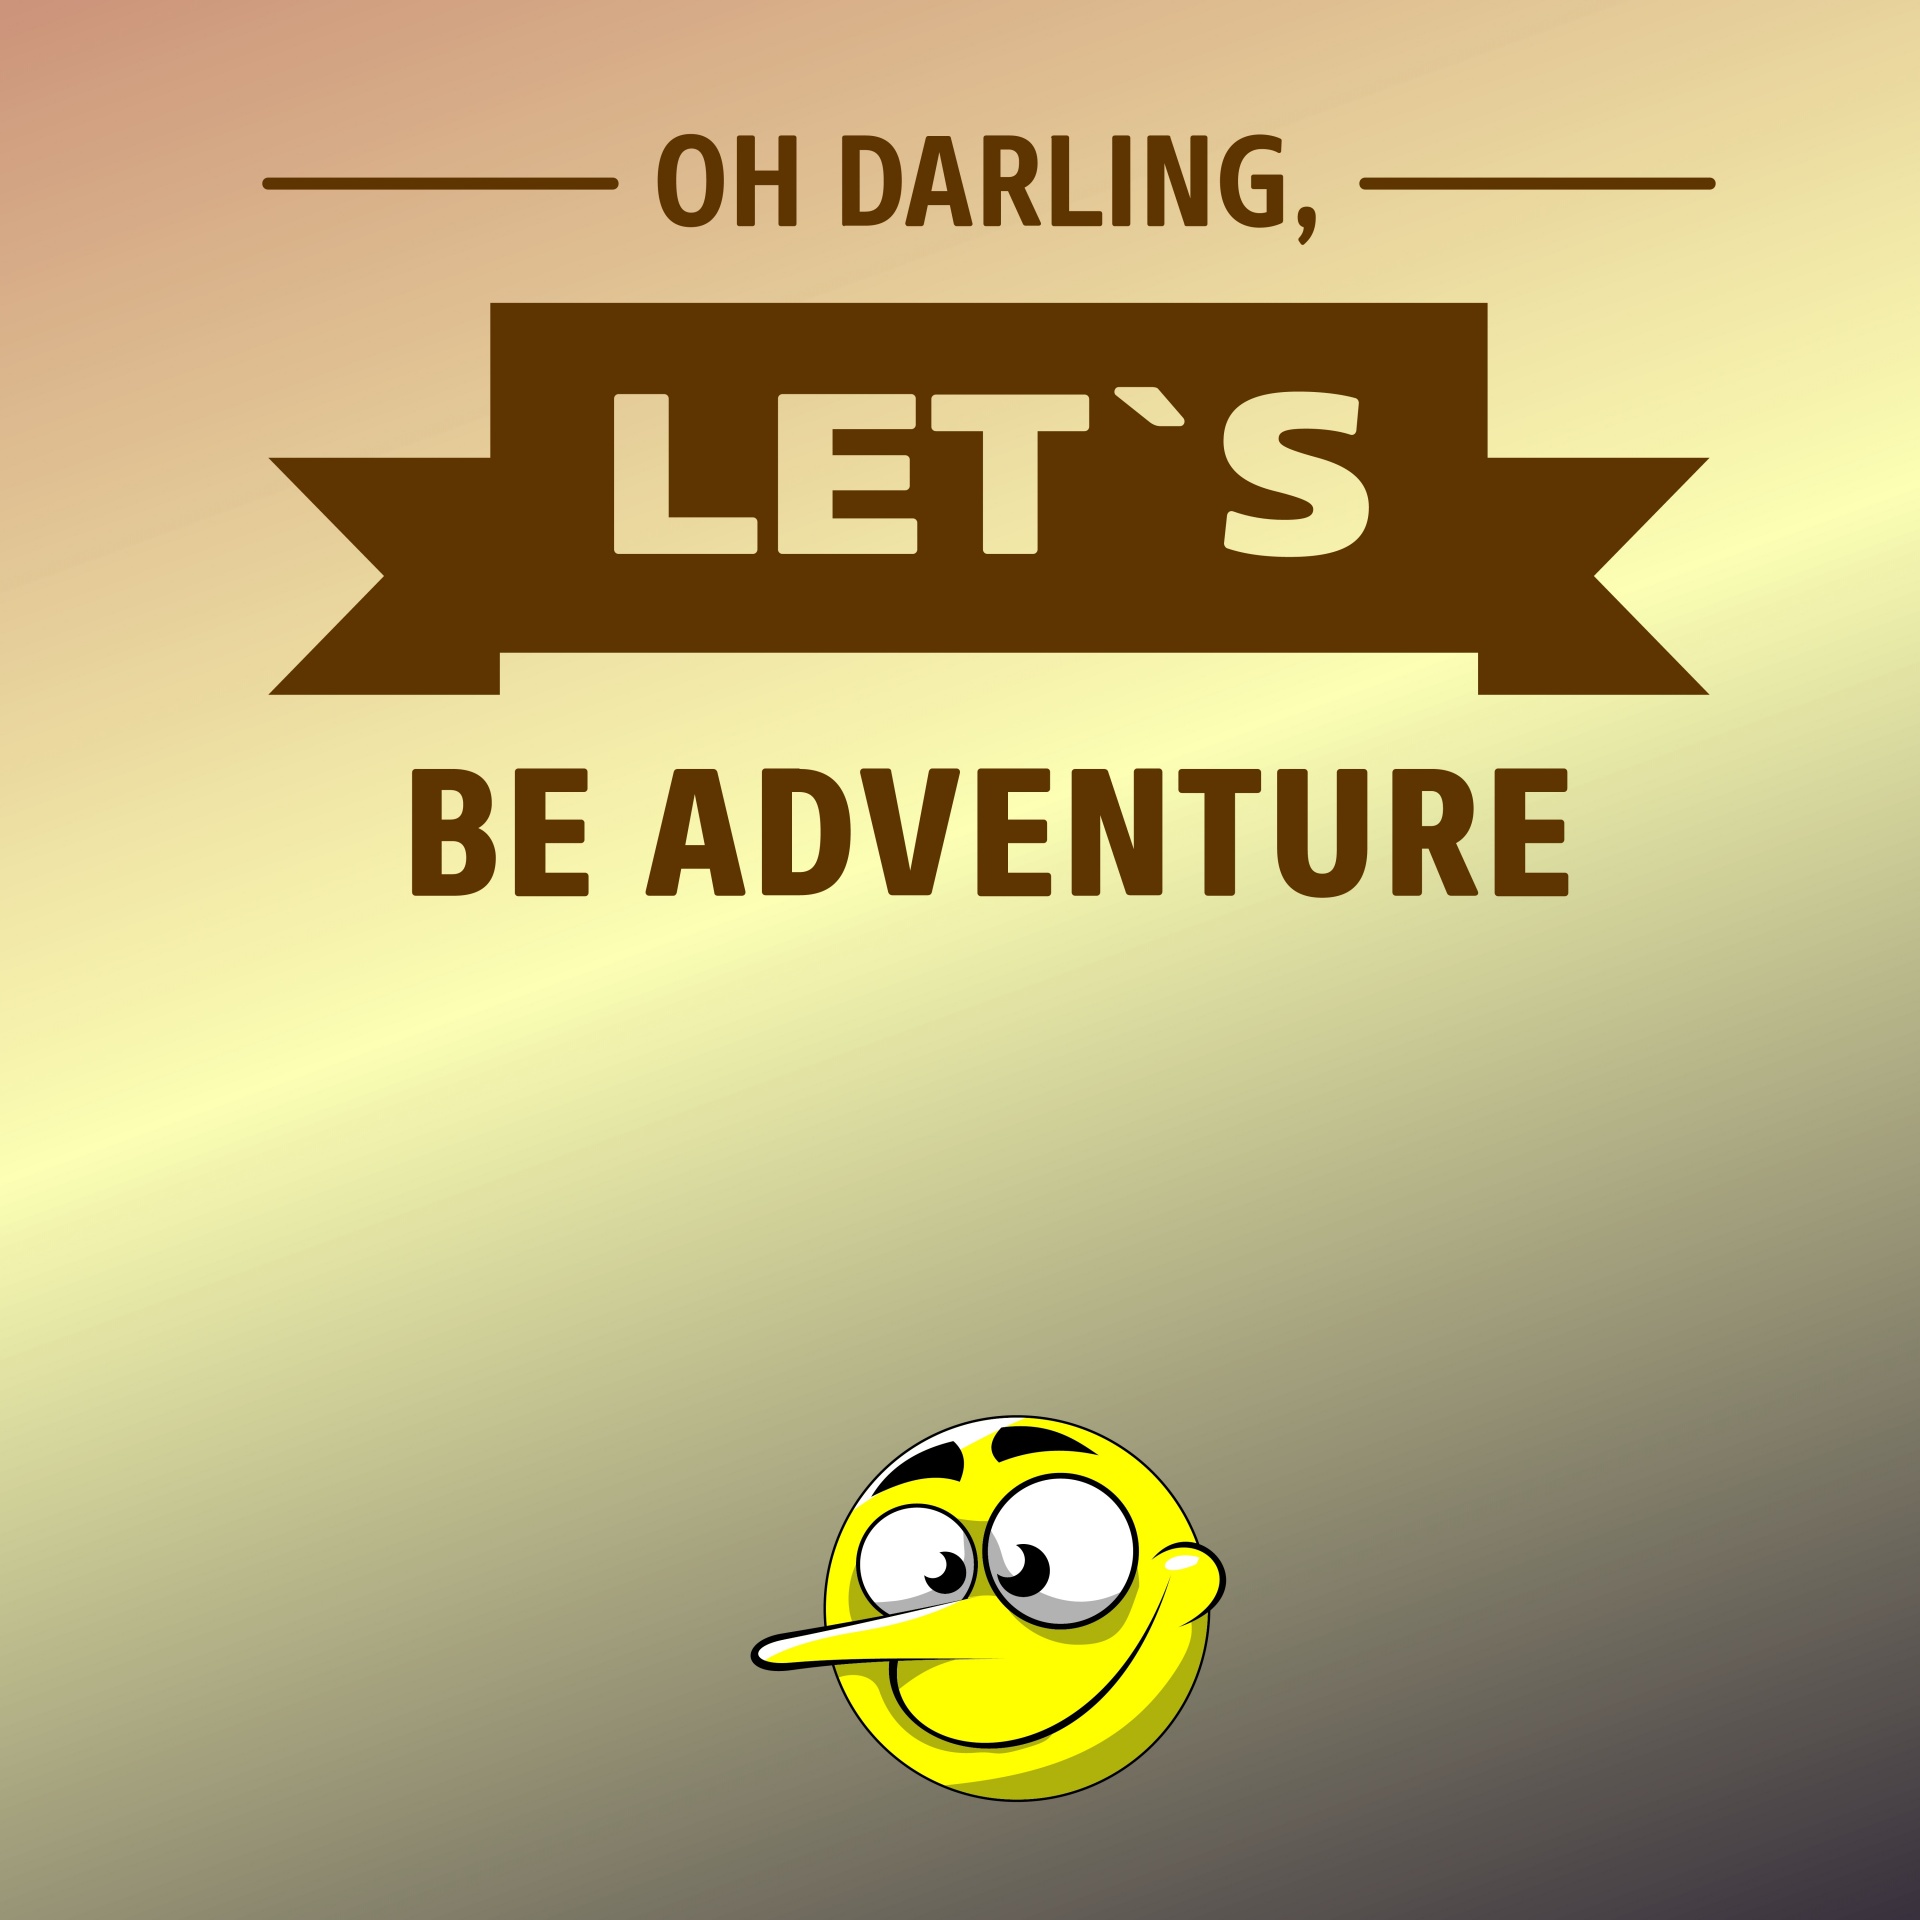 darling be adventure free photo